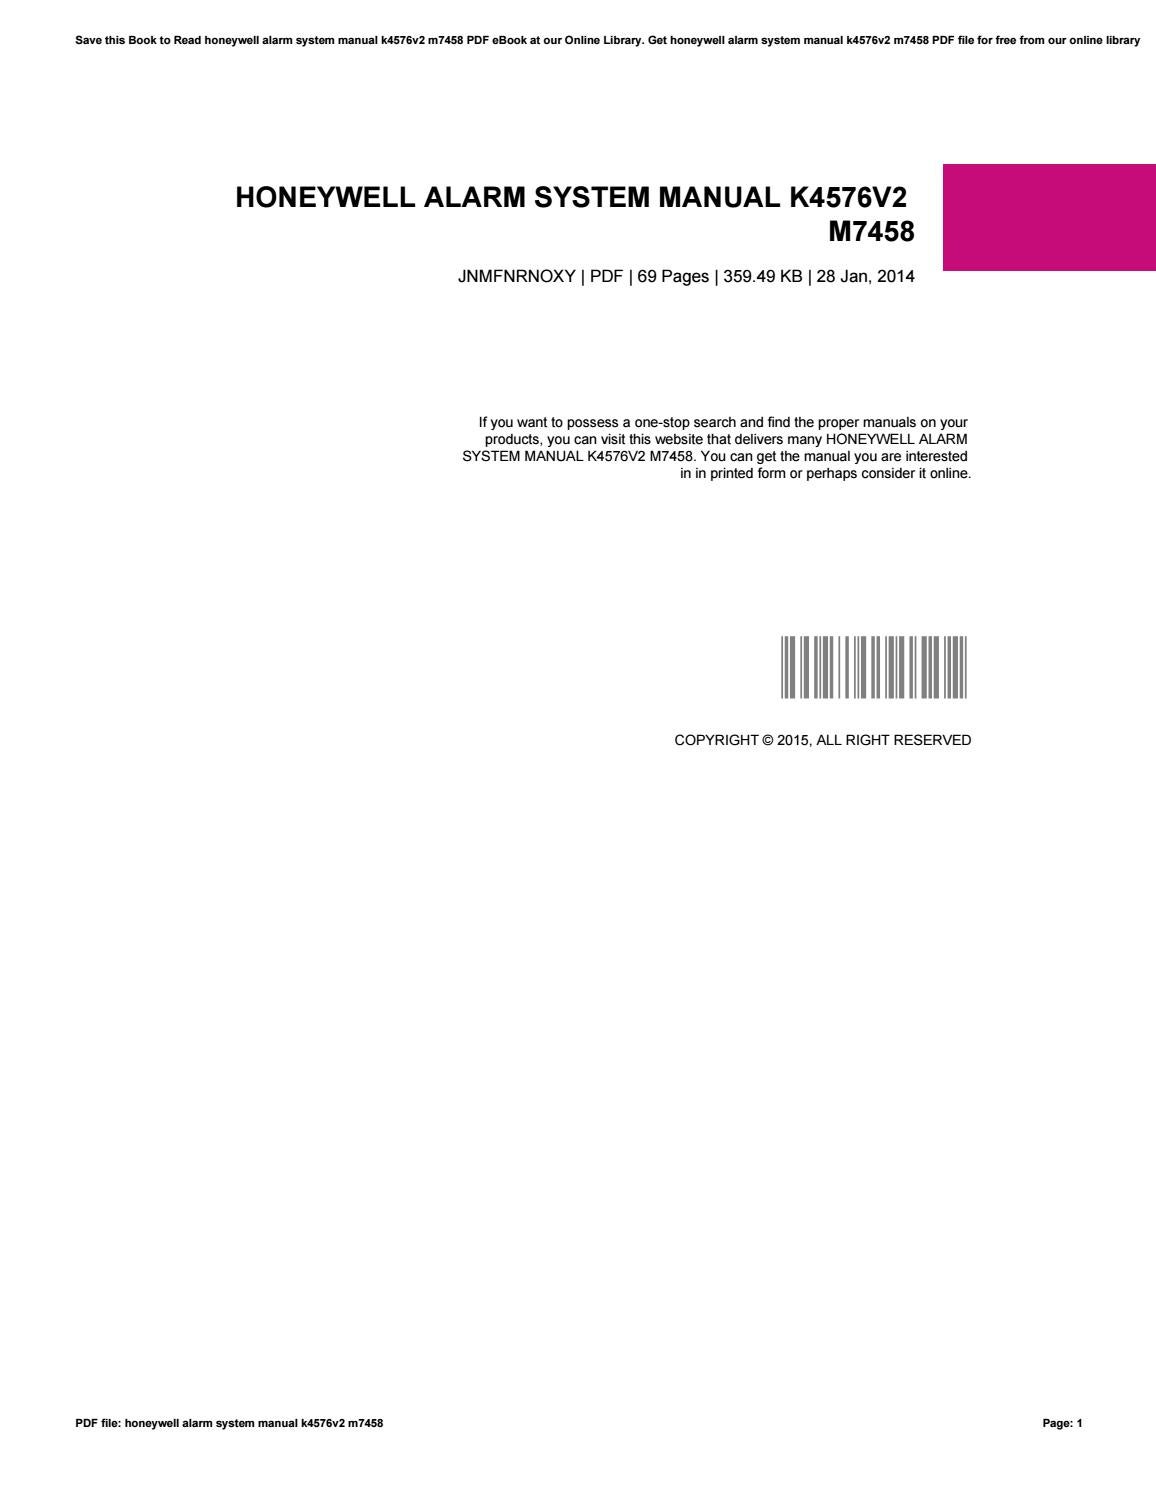 honeywell security alarm manual